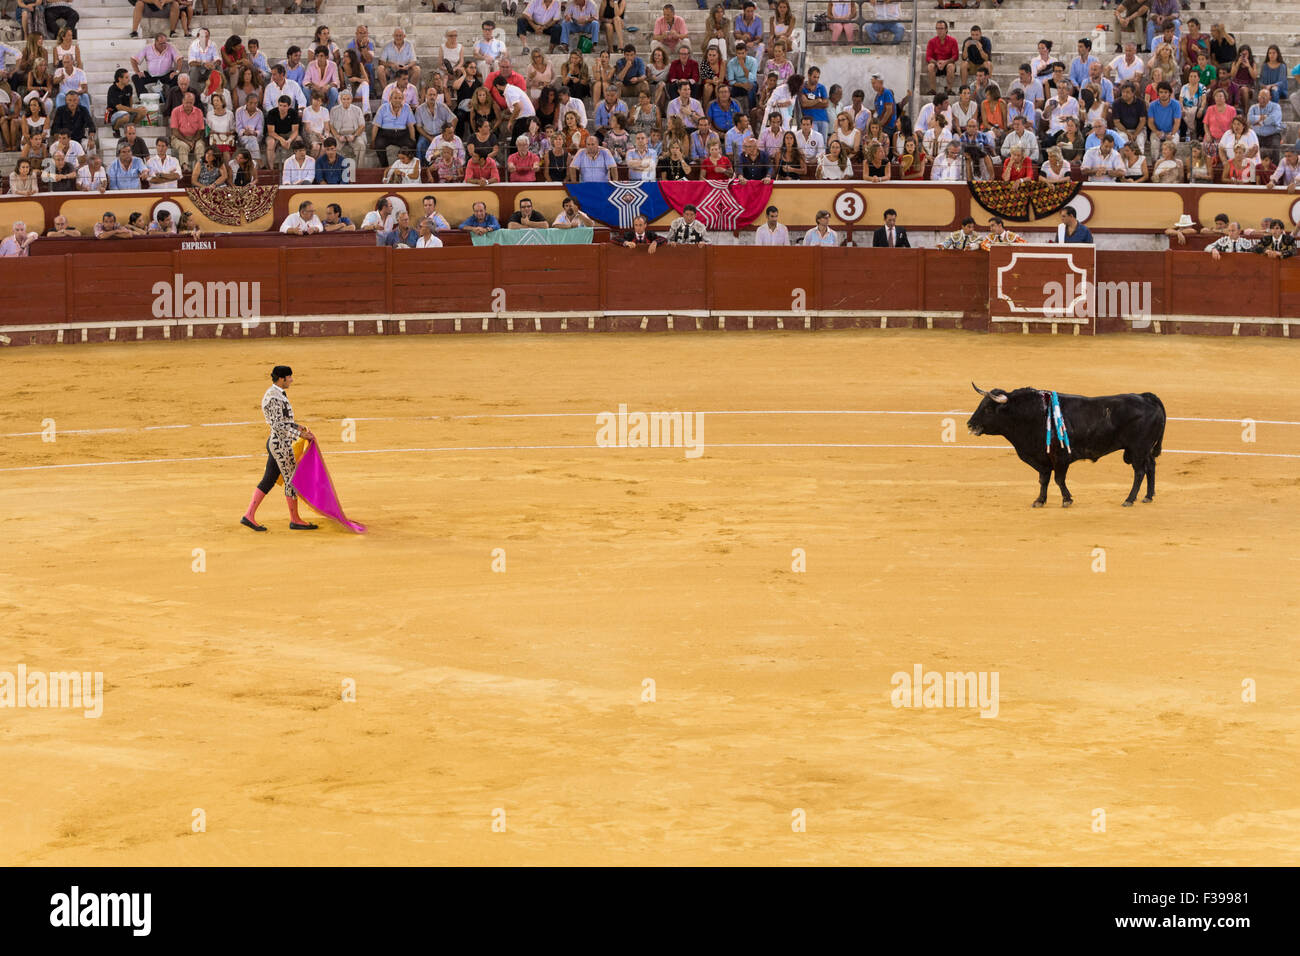 Bull fighting in Spain / Corrida de Toros en España Stock Photo